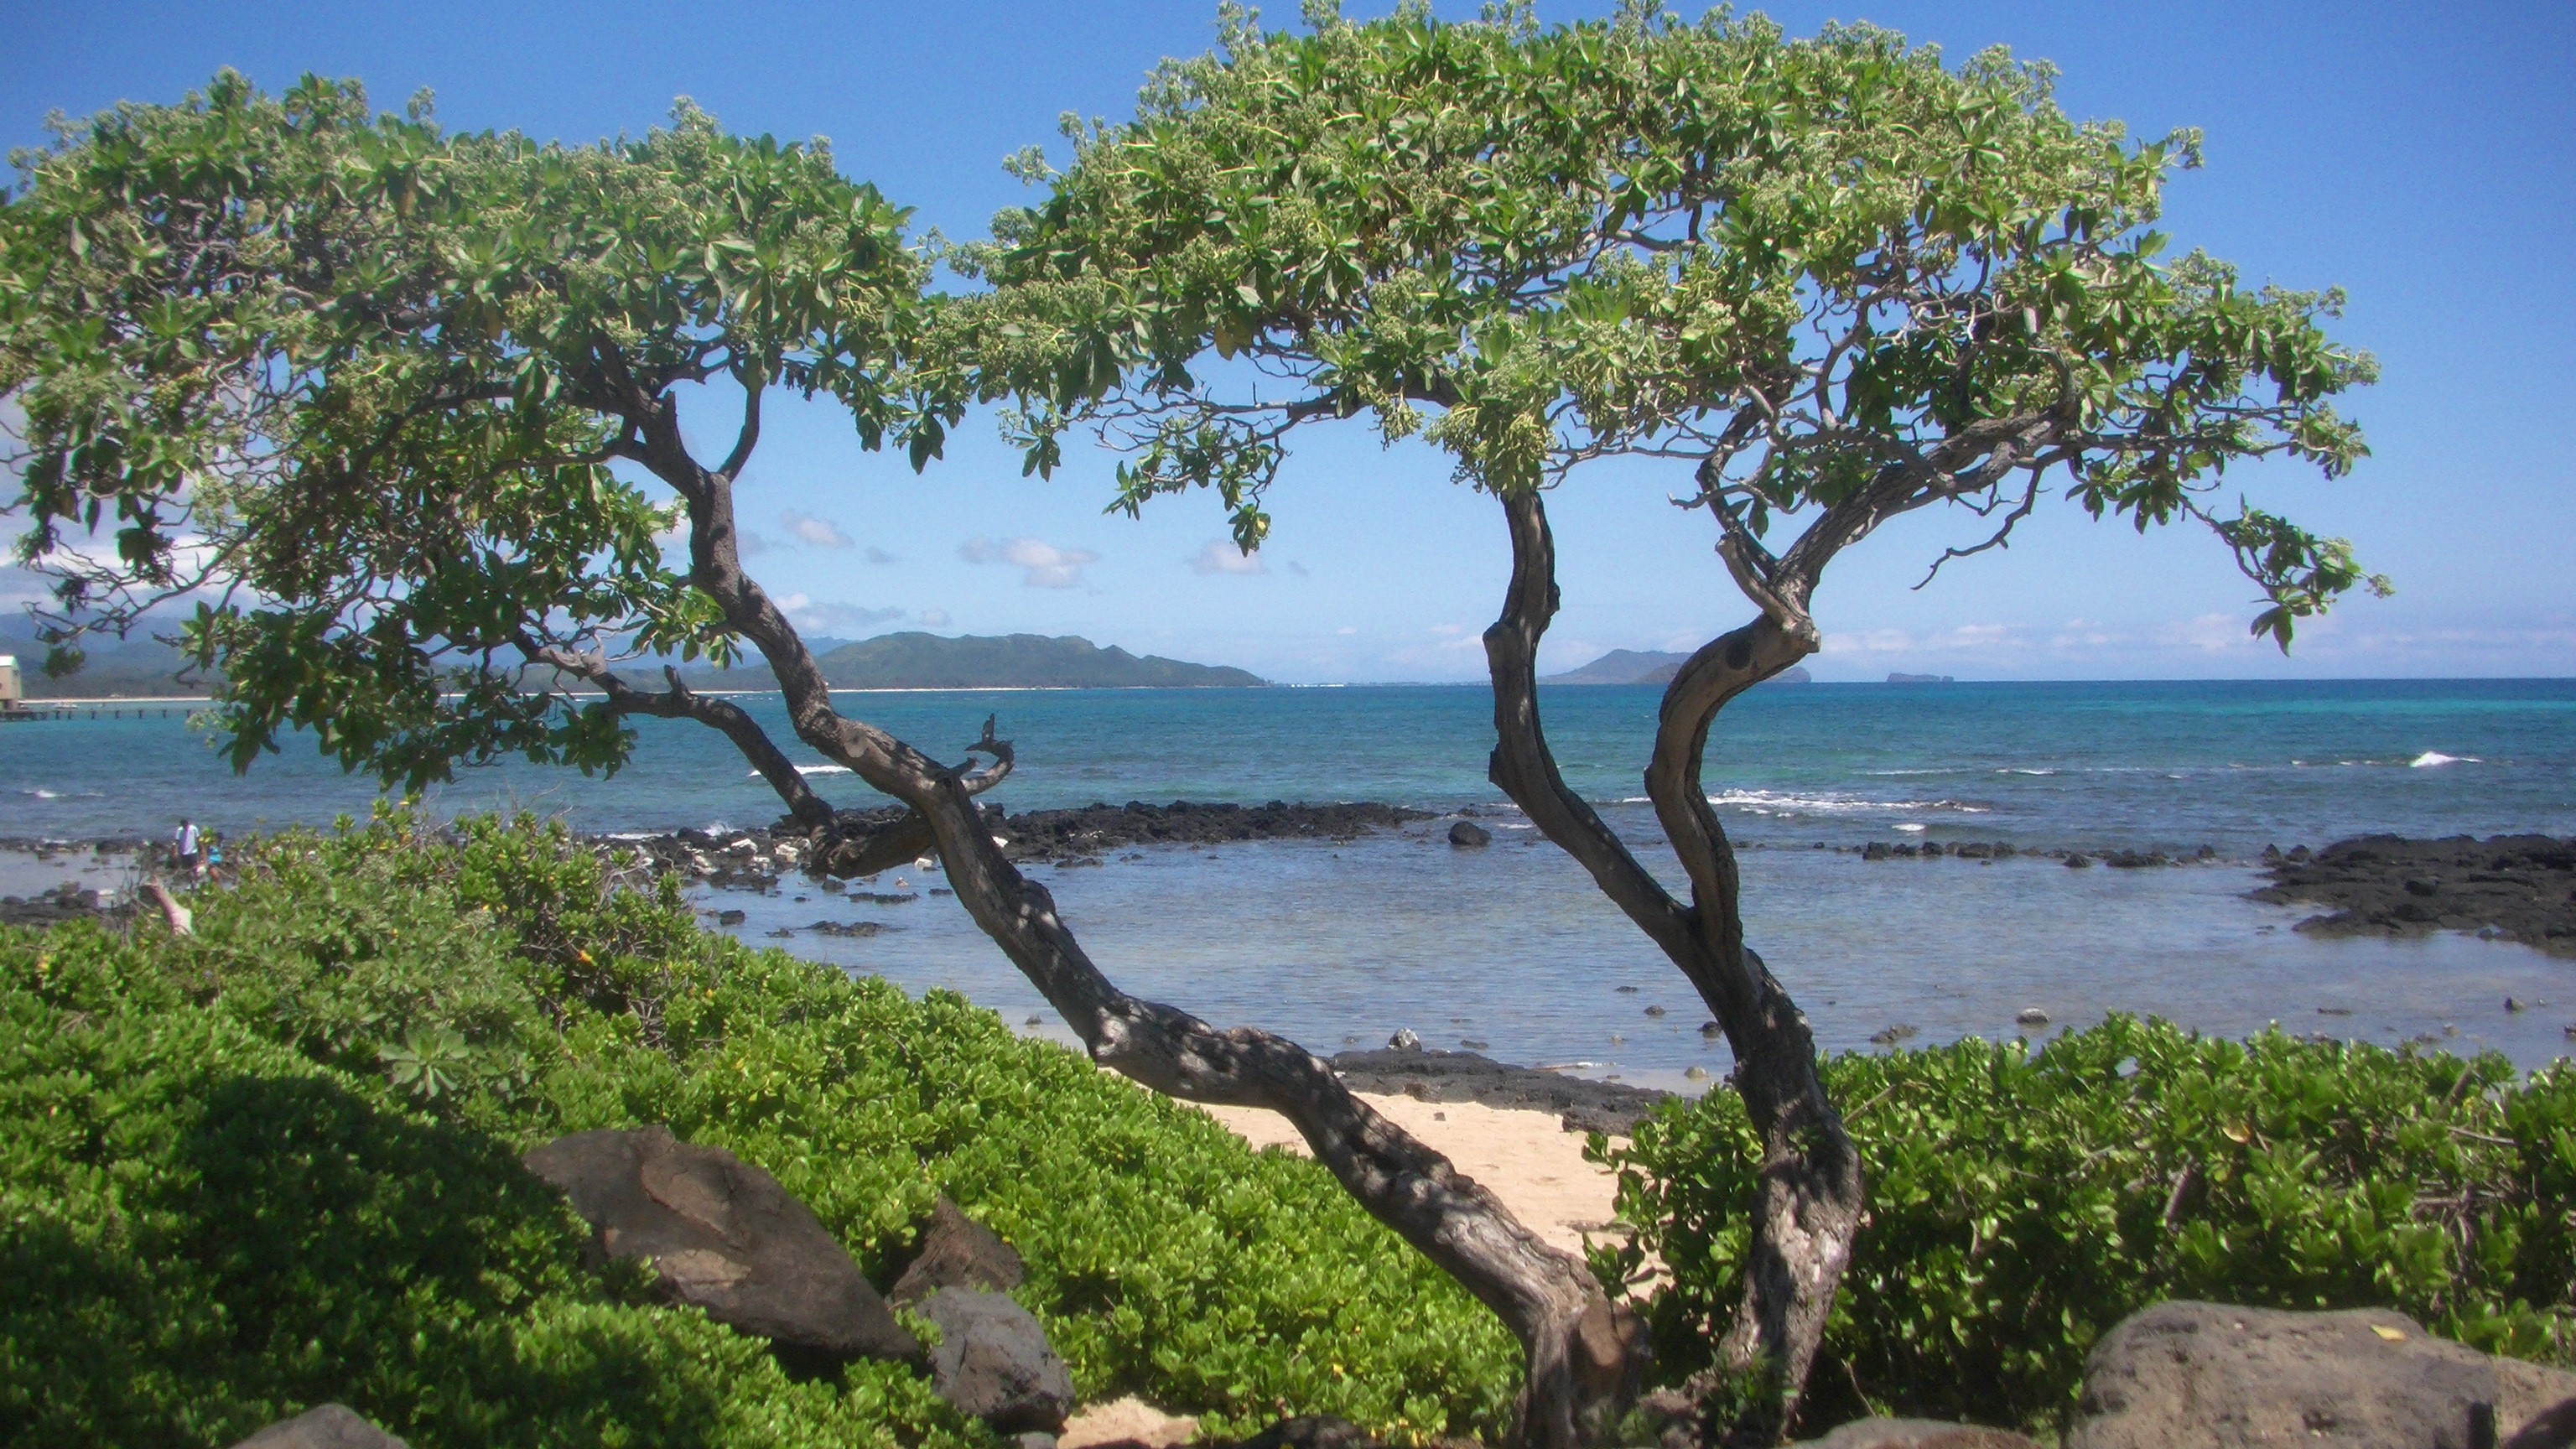 Beaches Waimanalo Beach Park Ocean Trees Oahu Hawaii Desktop